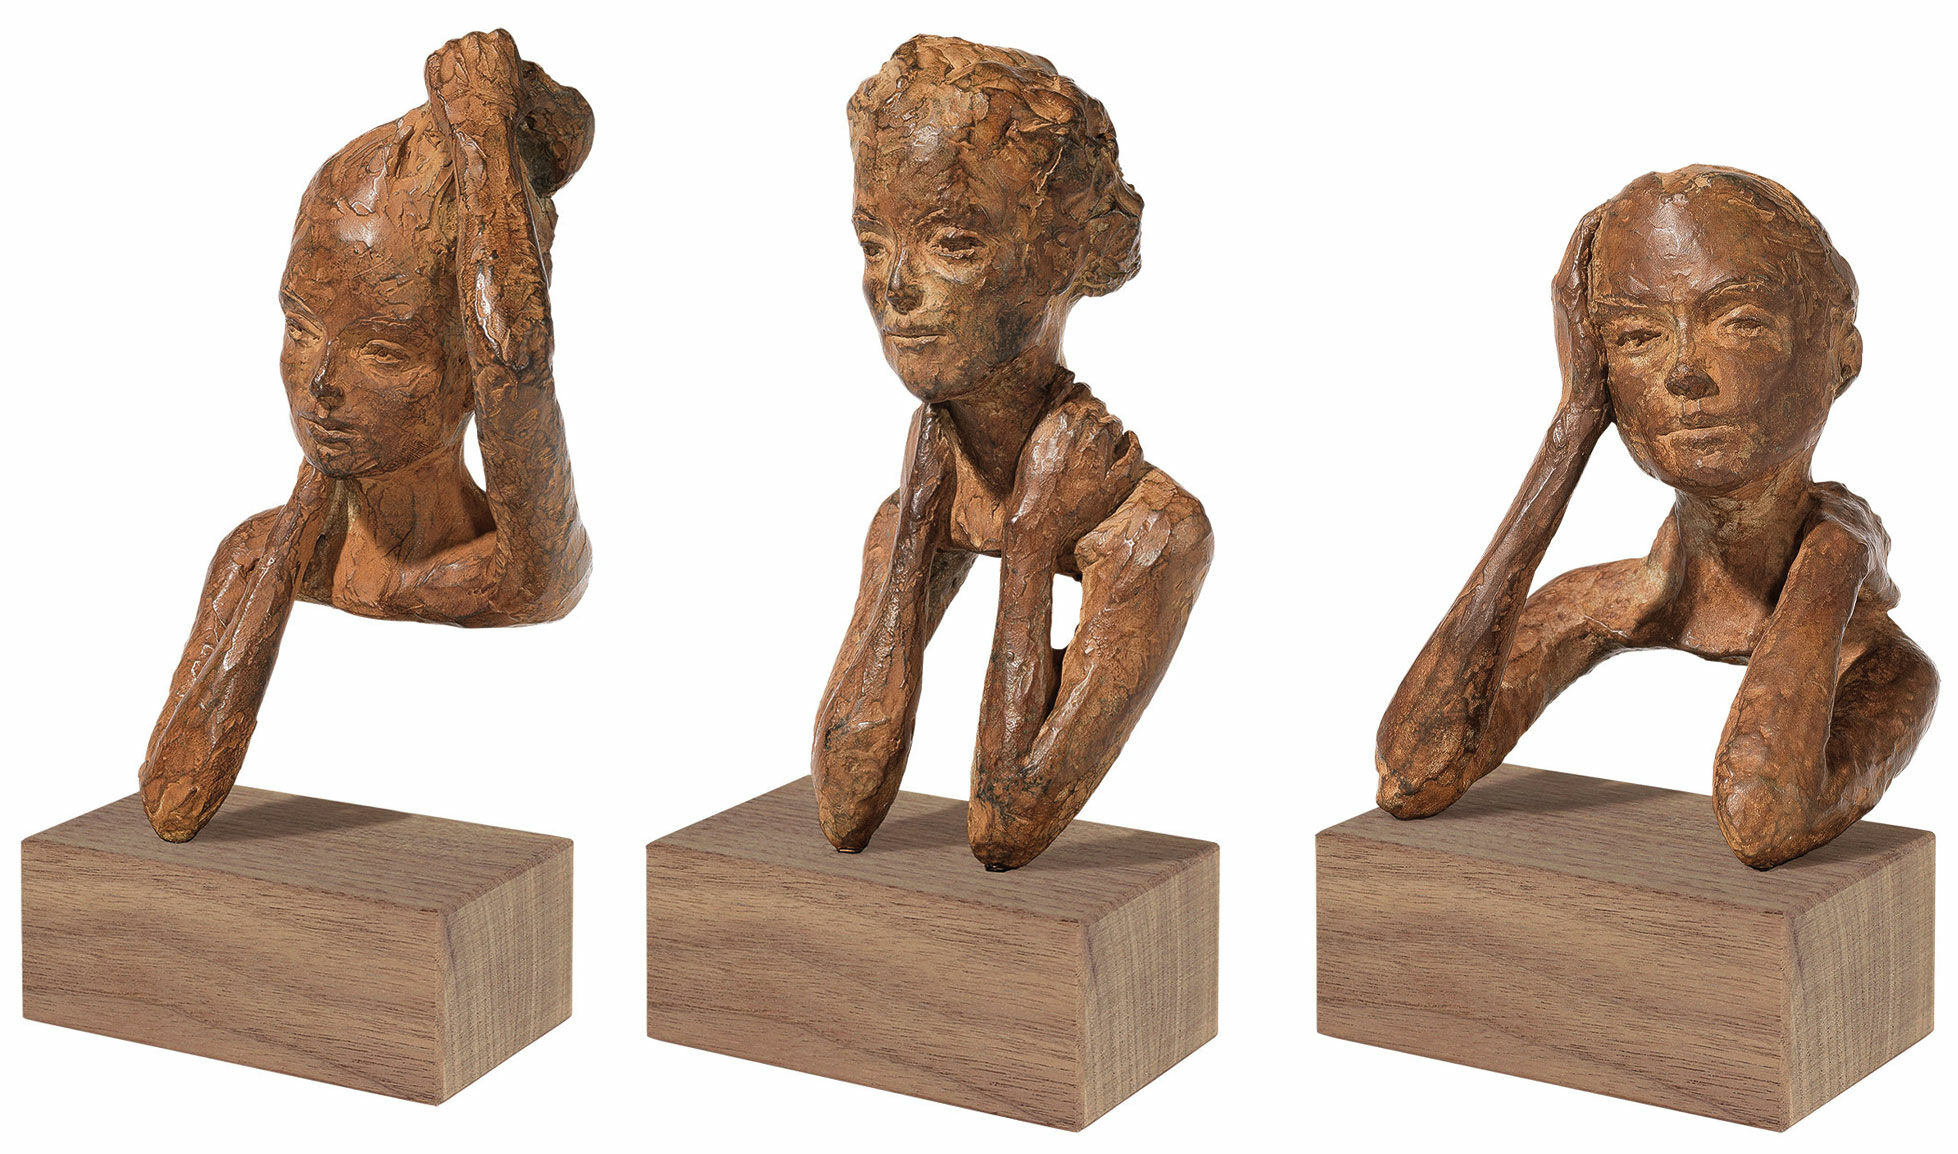 Set of 3 sculptures "Emotions", bronze by Valerie Otte